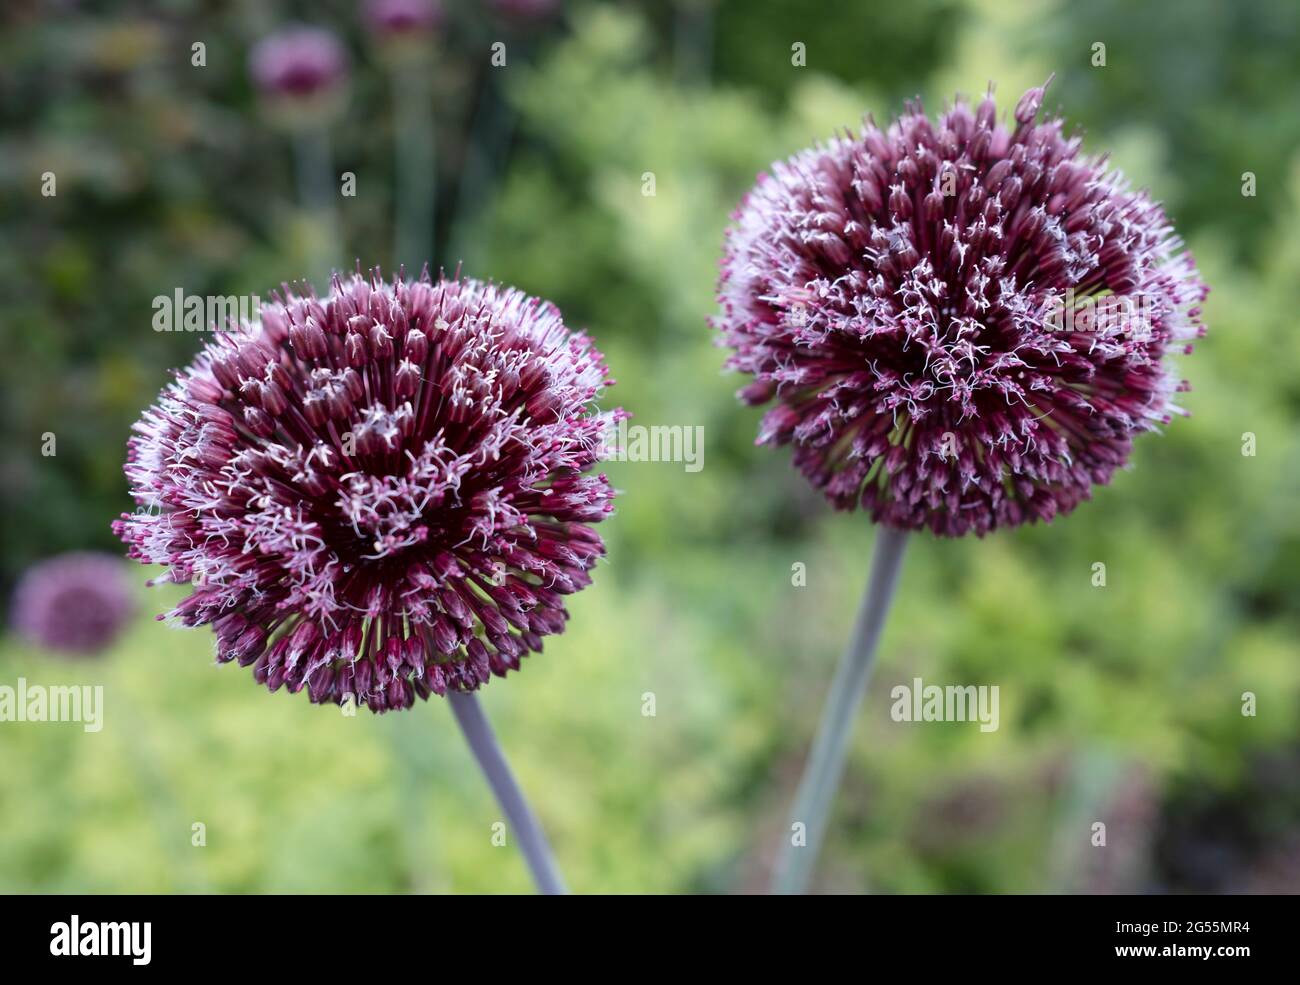 Allium atroviolaceum Boiss Broadleaf Wild Leek flowers in closeup Stock Photo